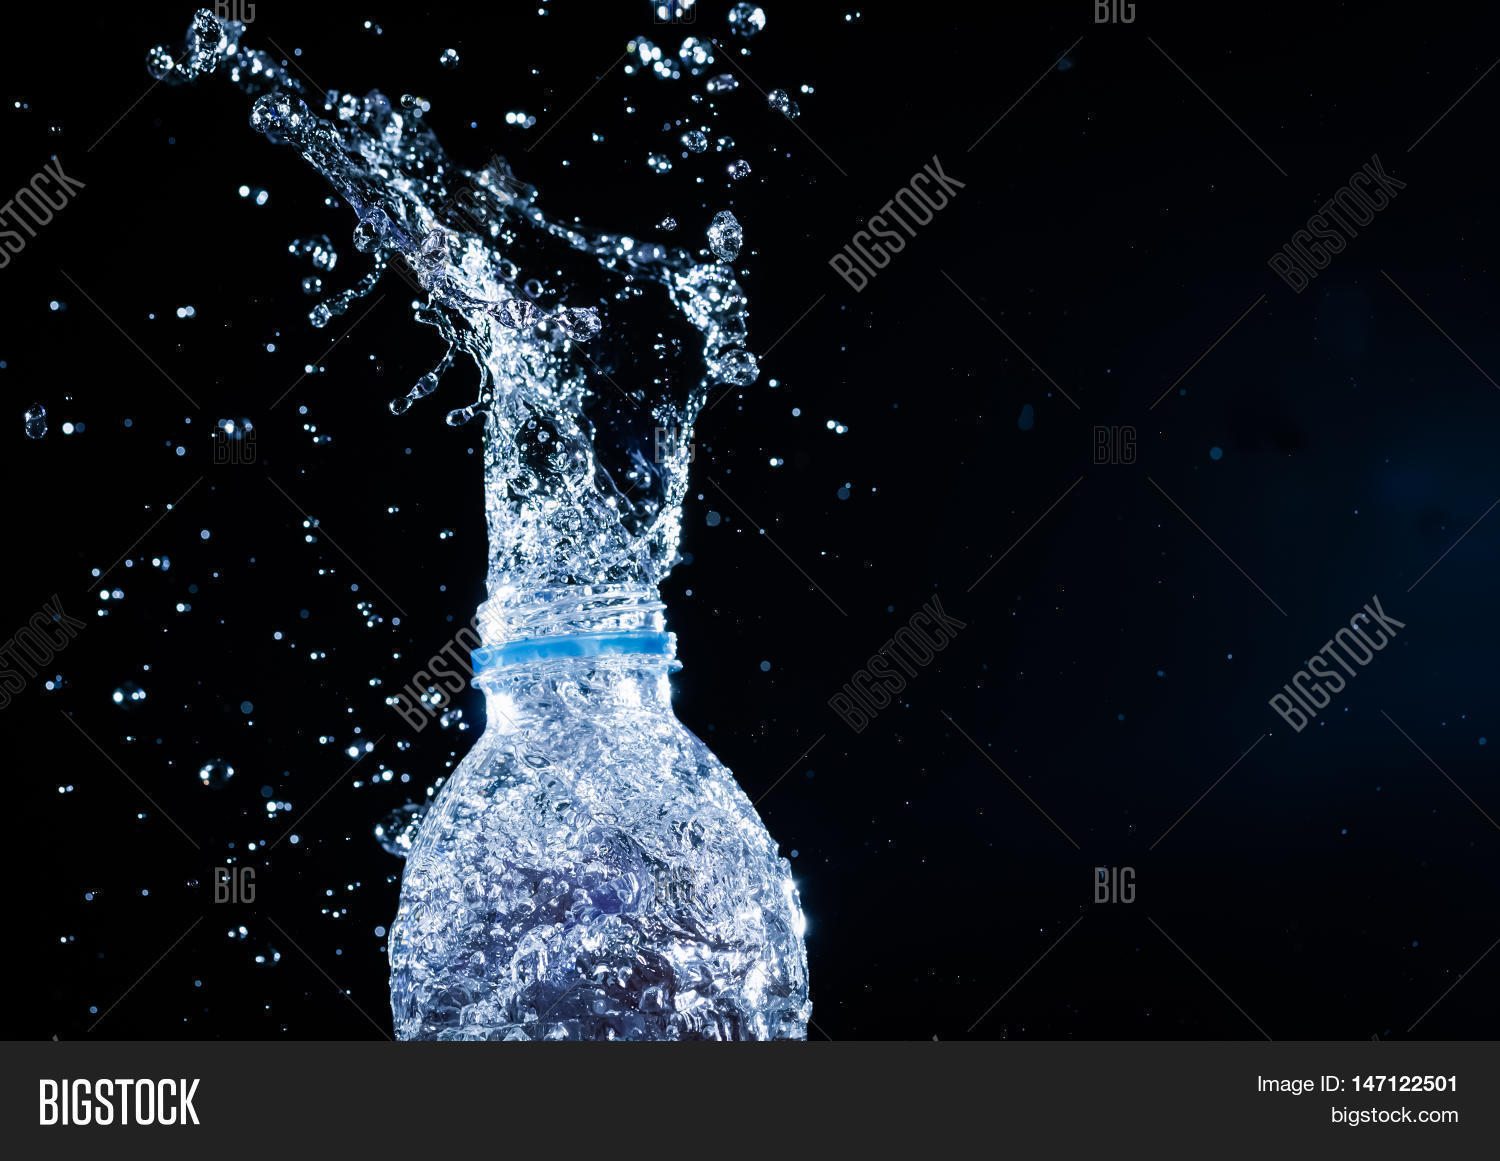 Water Splashes Bottle Image Photo Trial Bigstock